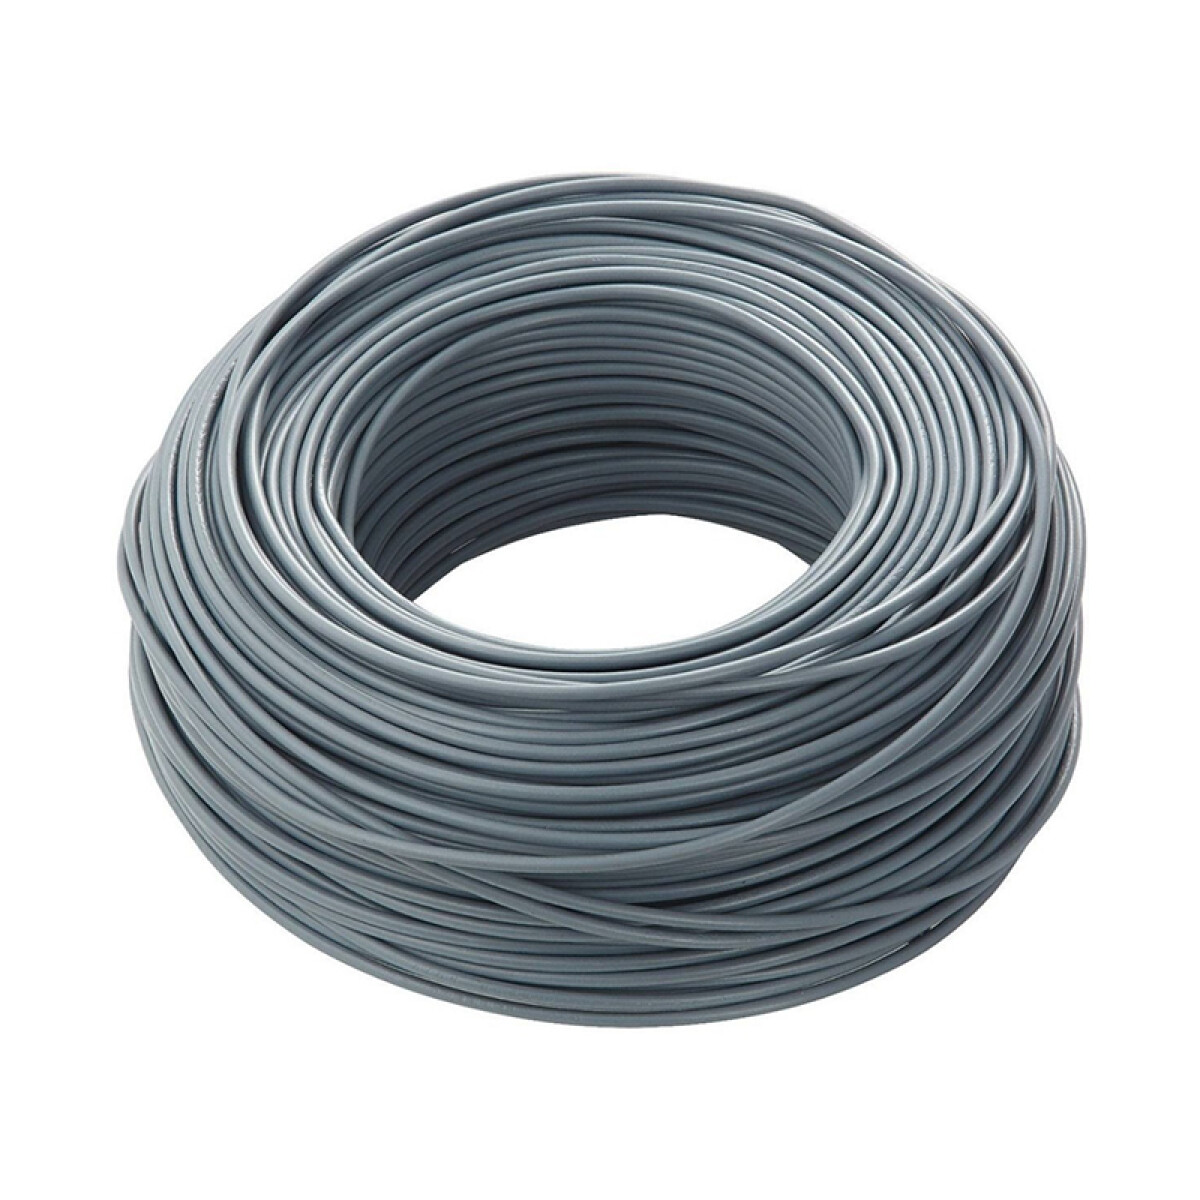 Cable bajo plástico gris 3x1mm² - Rollo 100 mts. - N04402 